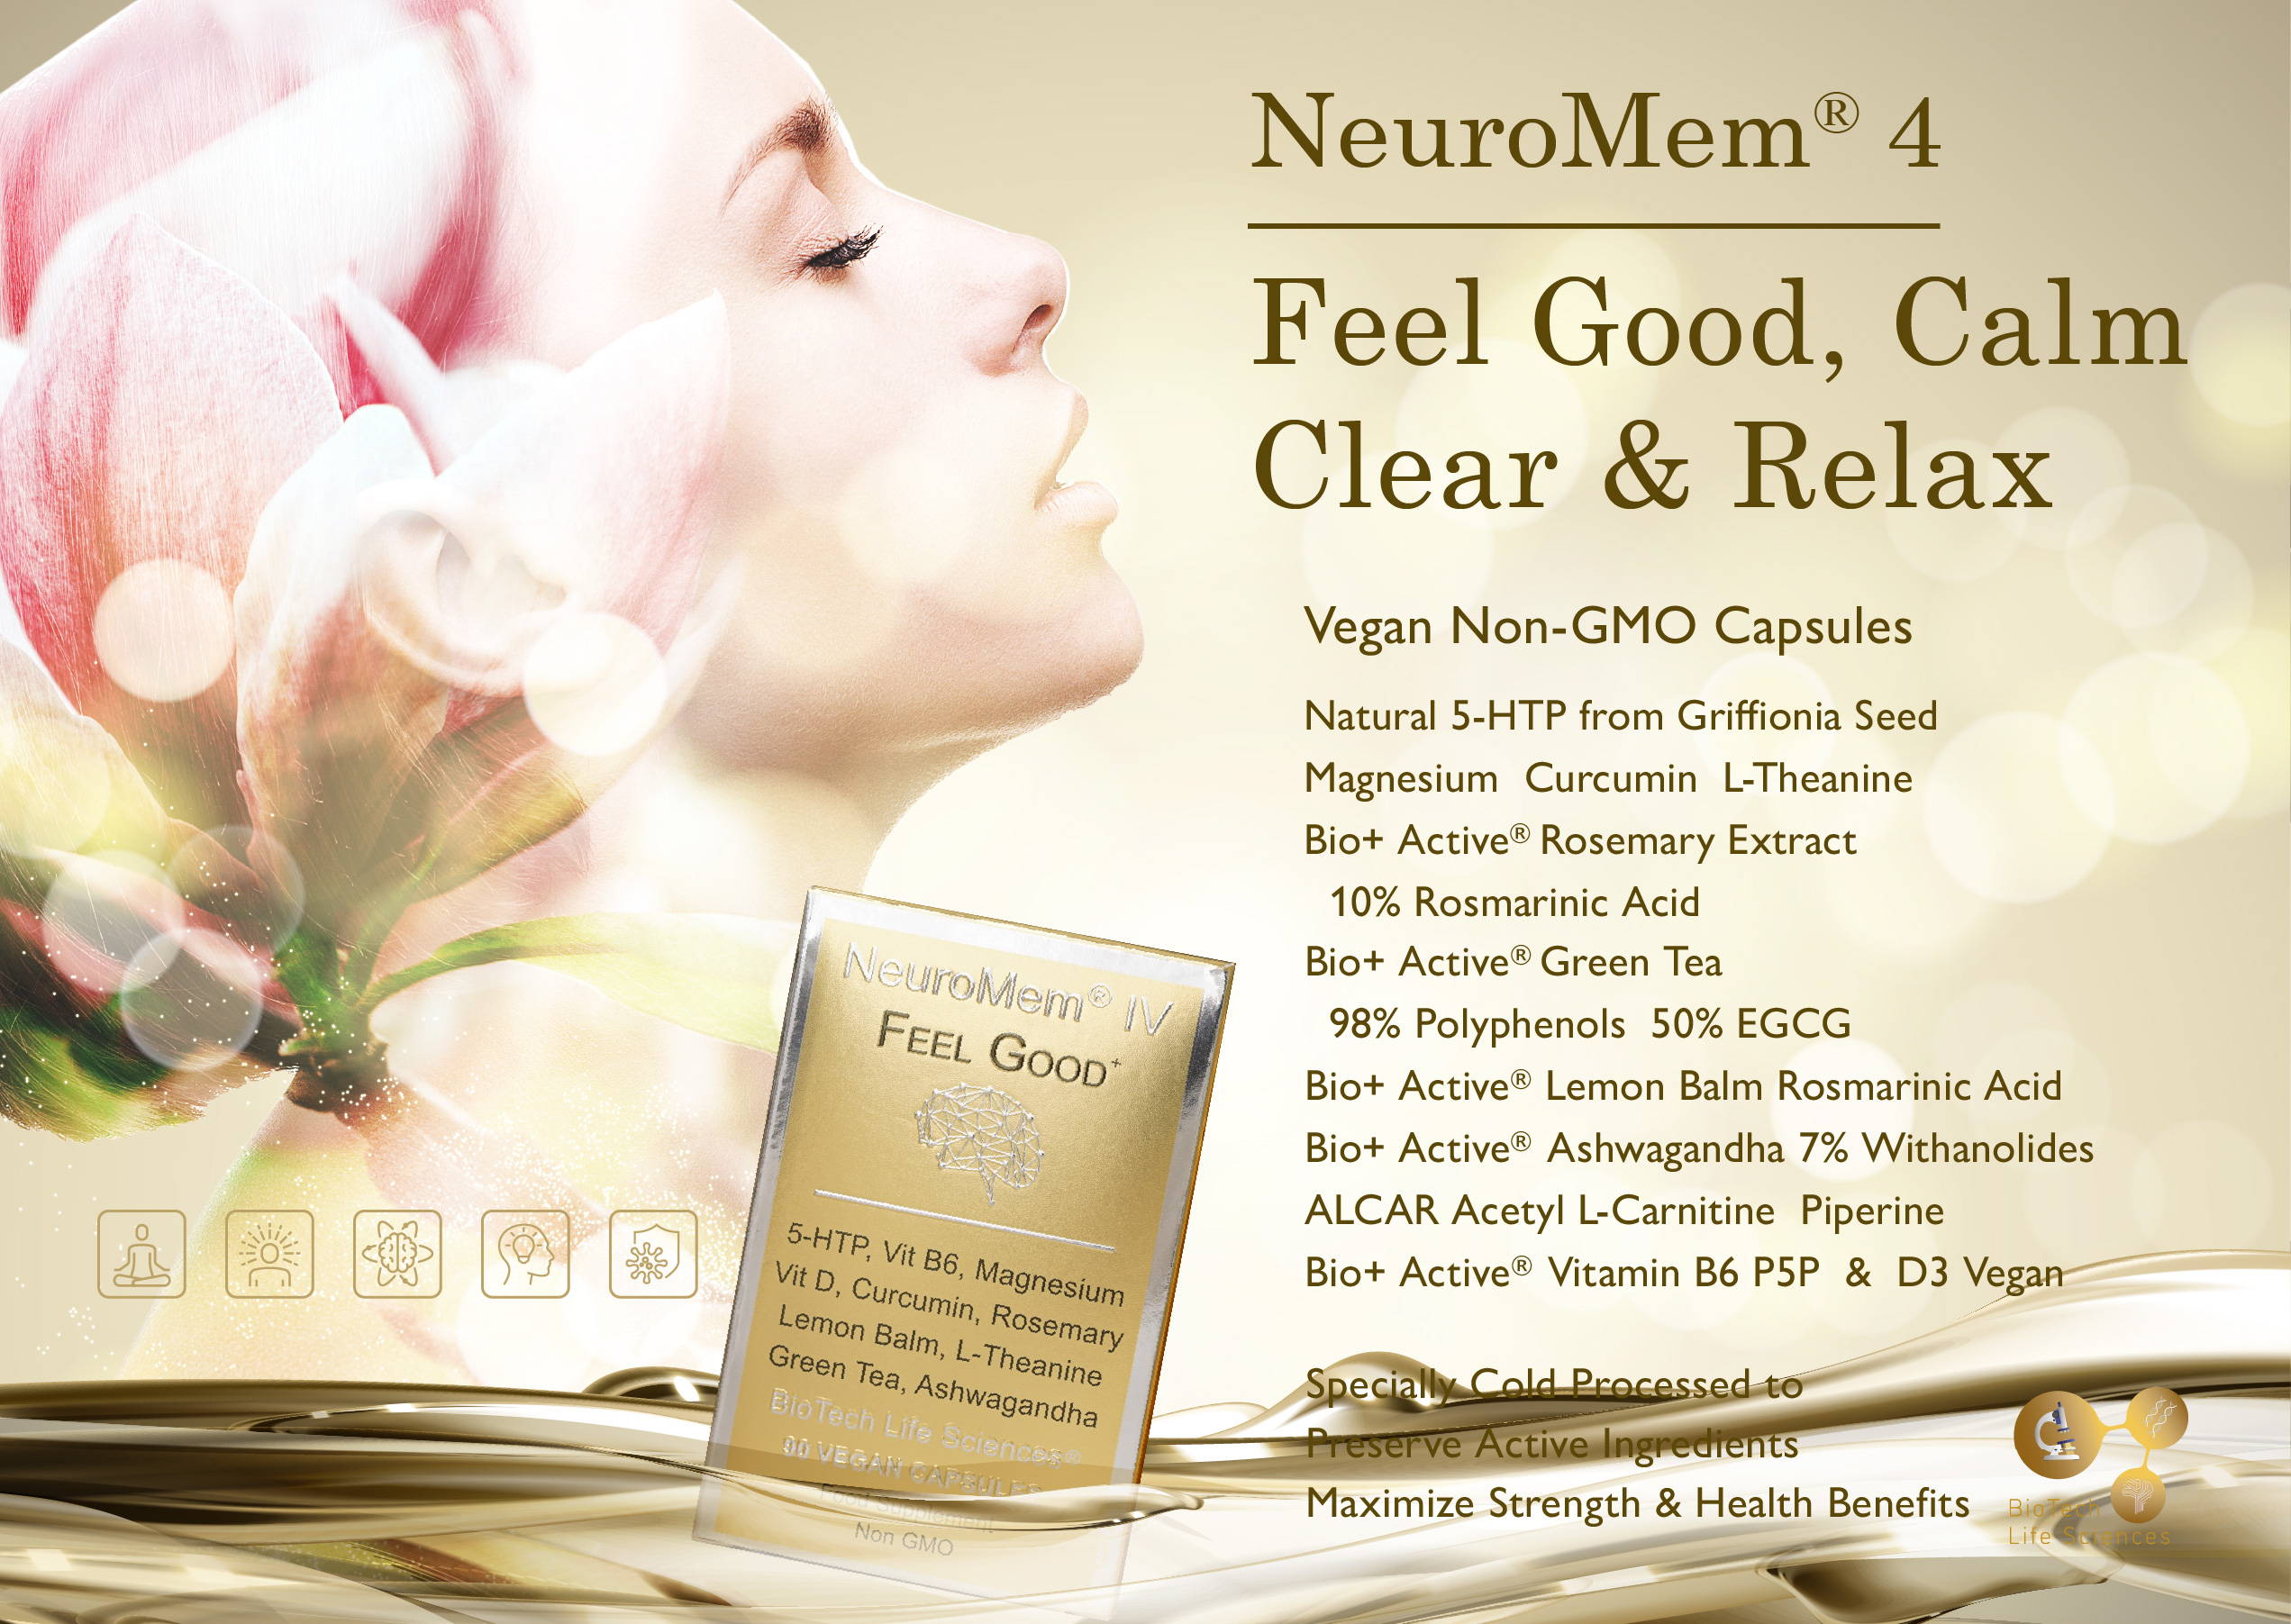 NeuroMem 4 Ingredients